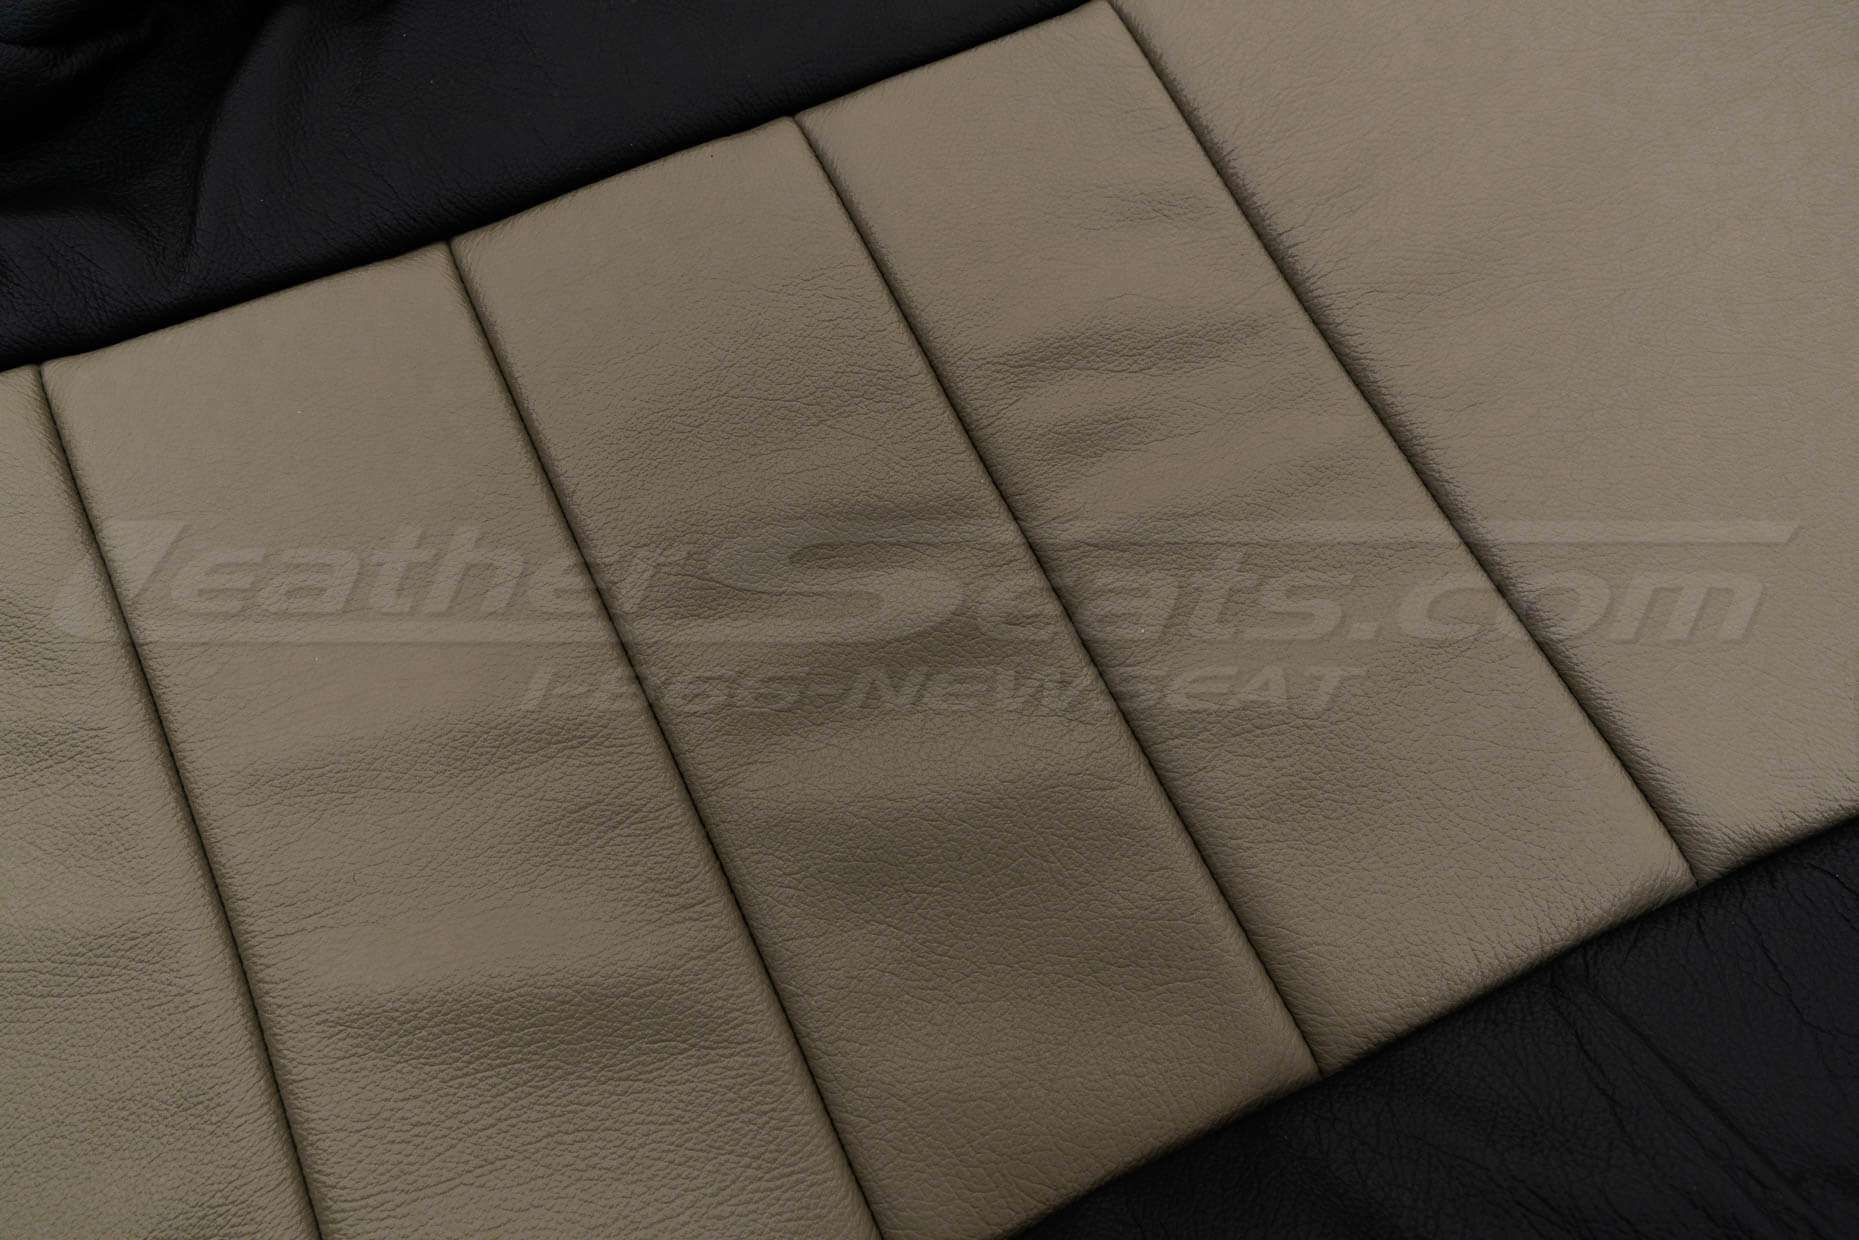 Bristol leather texture